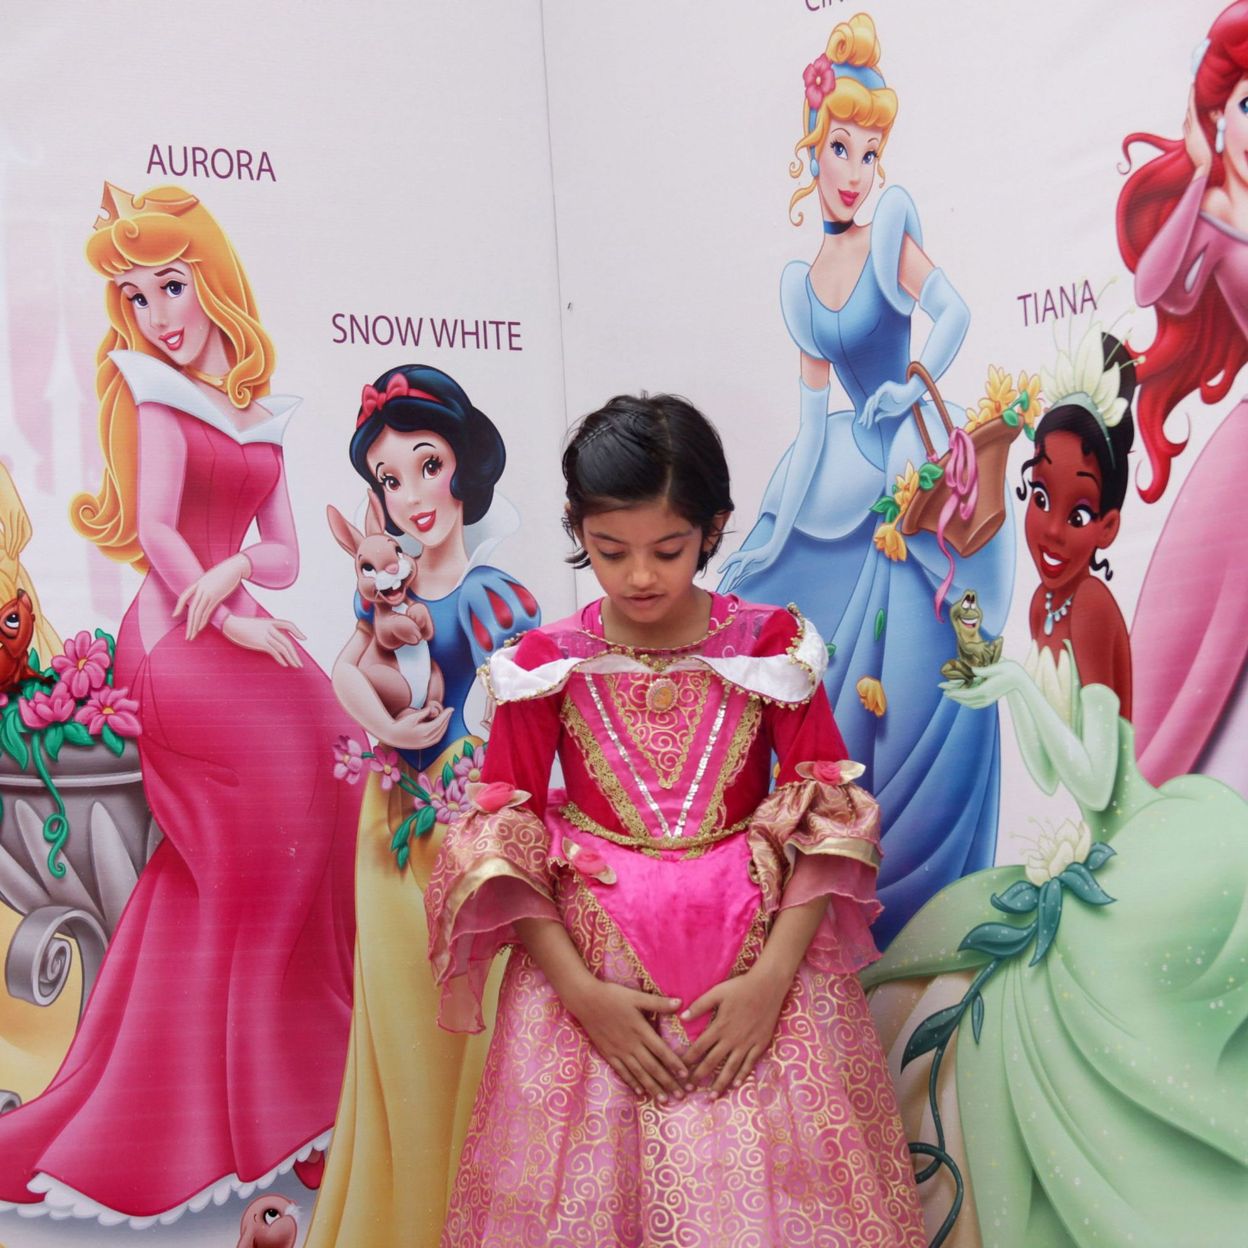 Chez Disney, la princesse a du mal à s'émanciper